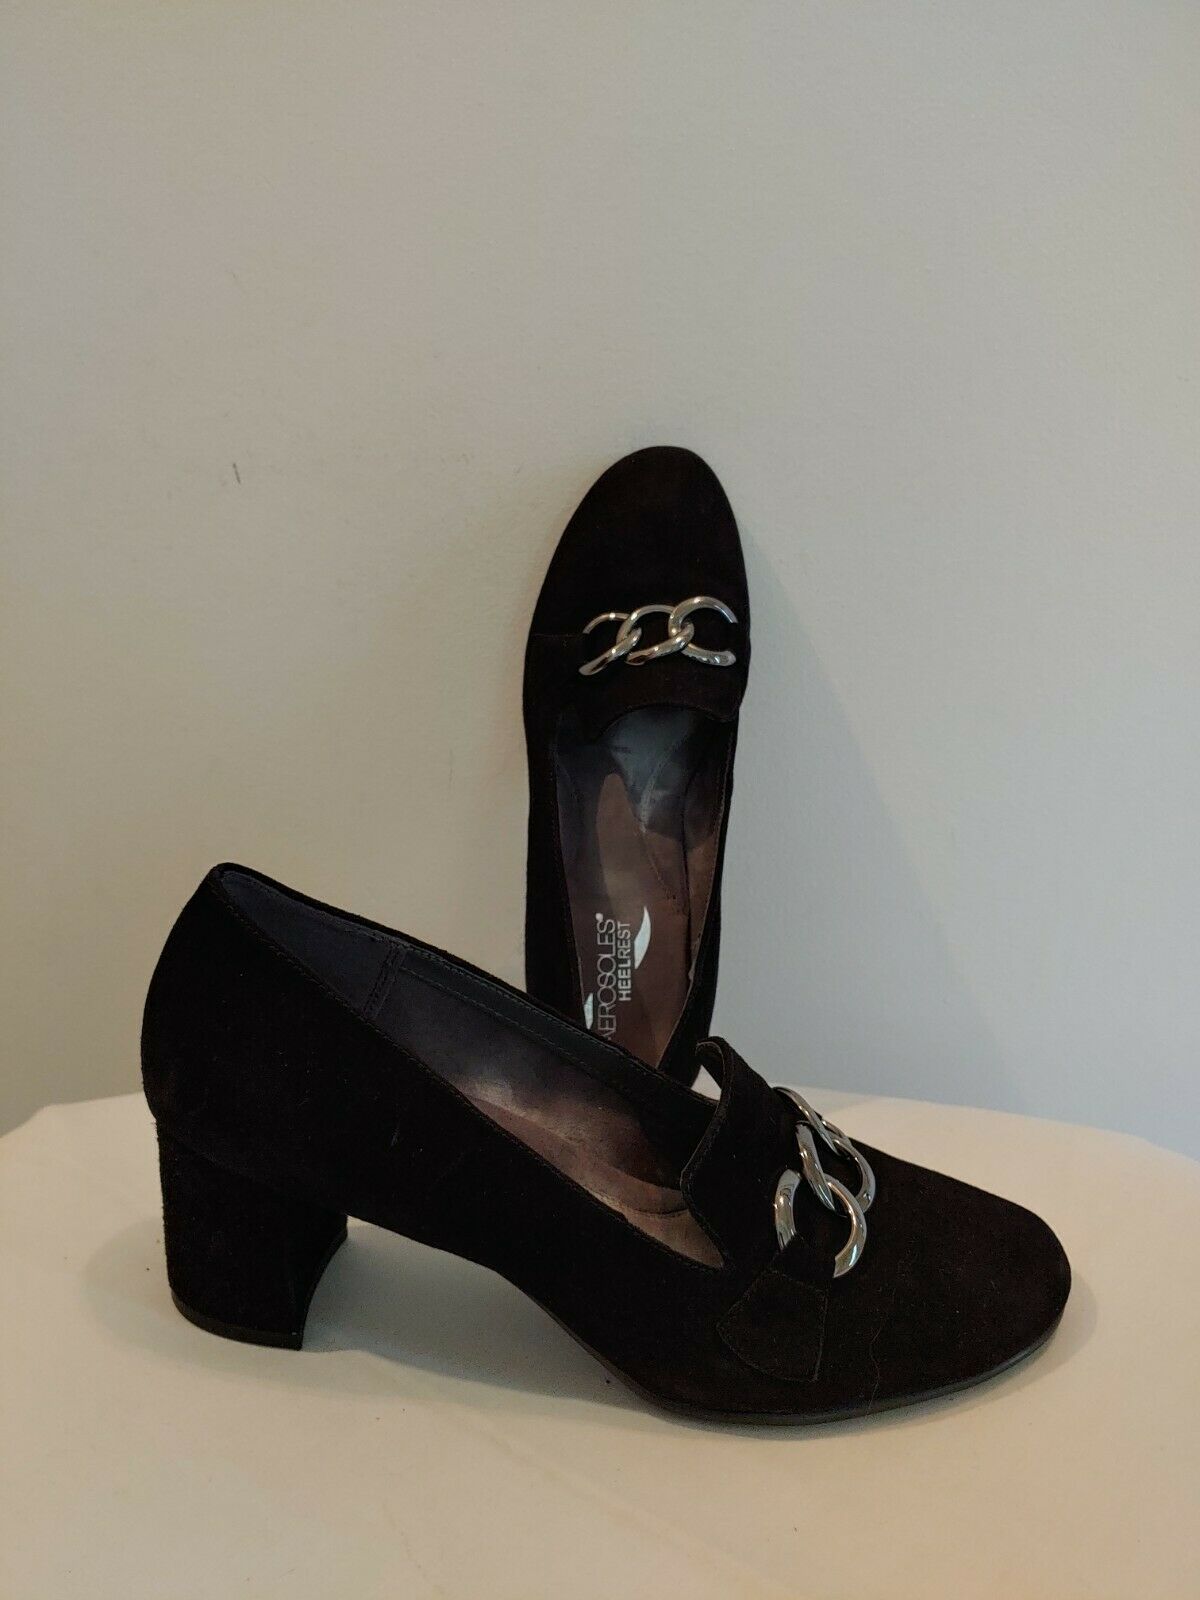 Aerosoles Heelrest Roxstar Women's Black Suede Leather Pumps Heels Shoes Sz 10 M